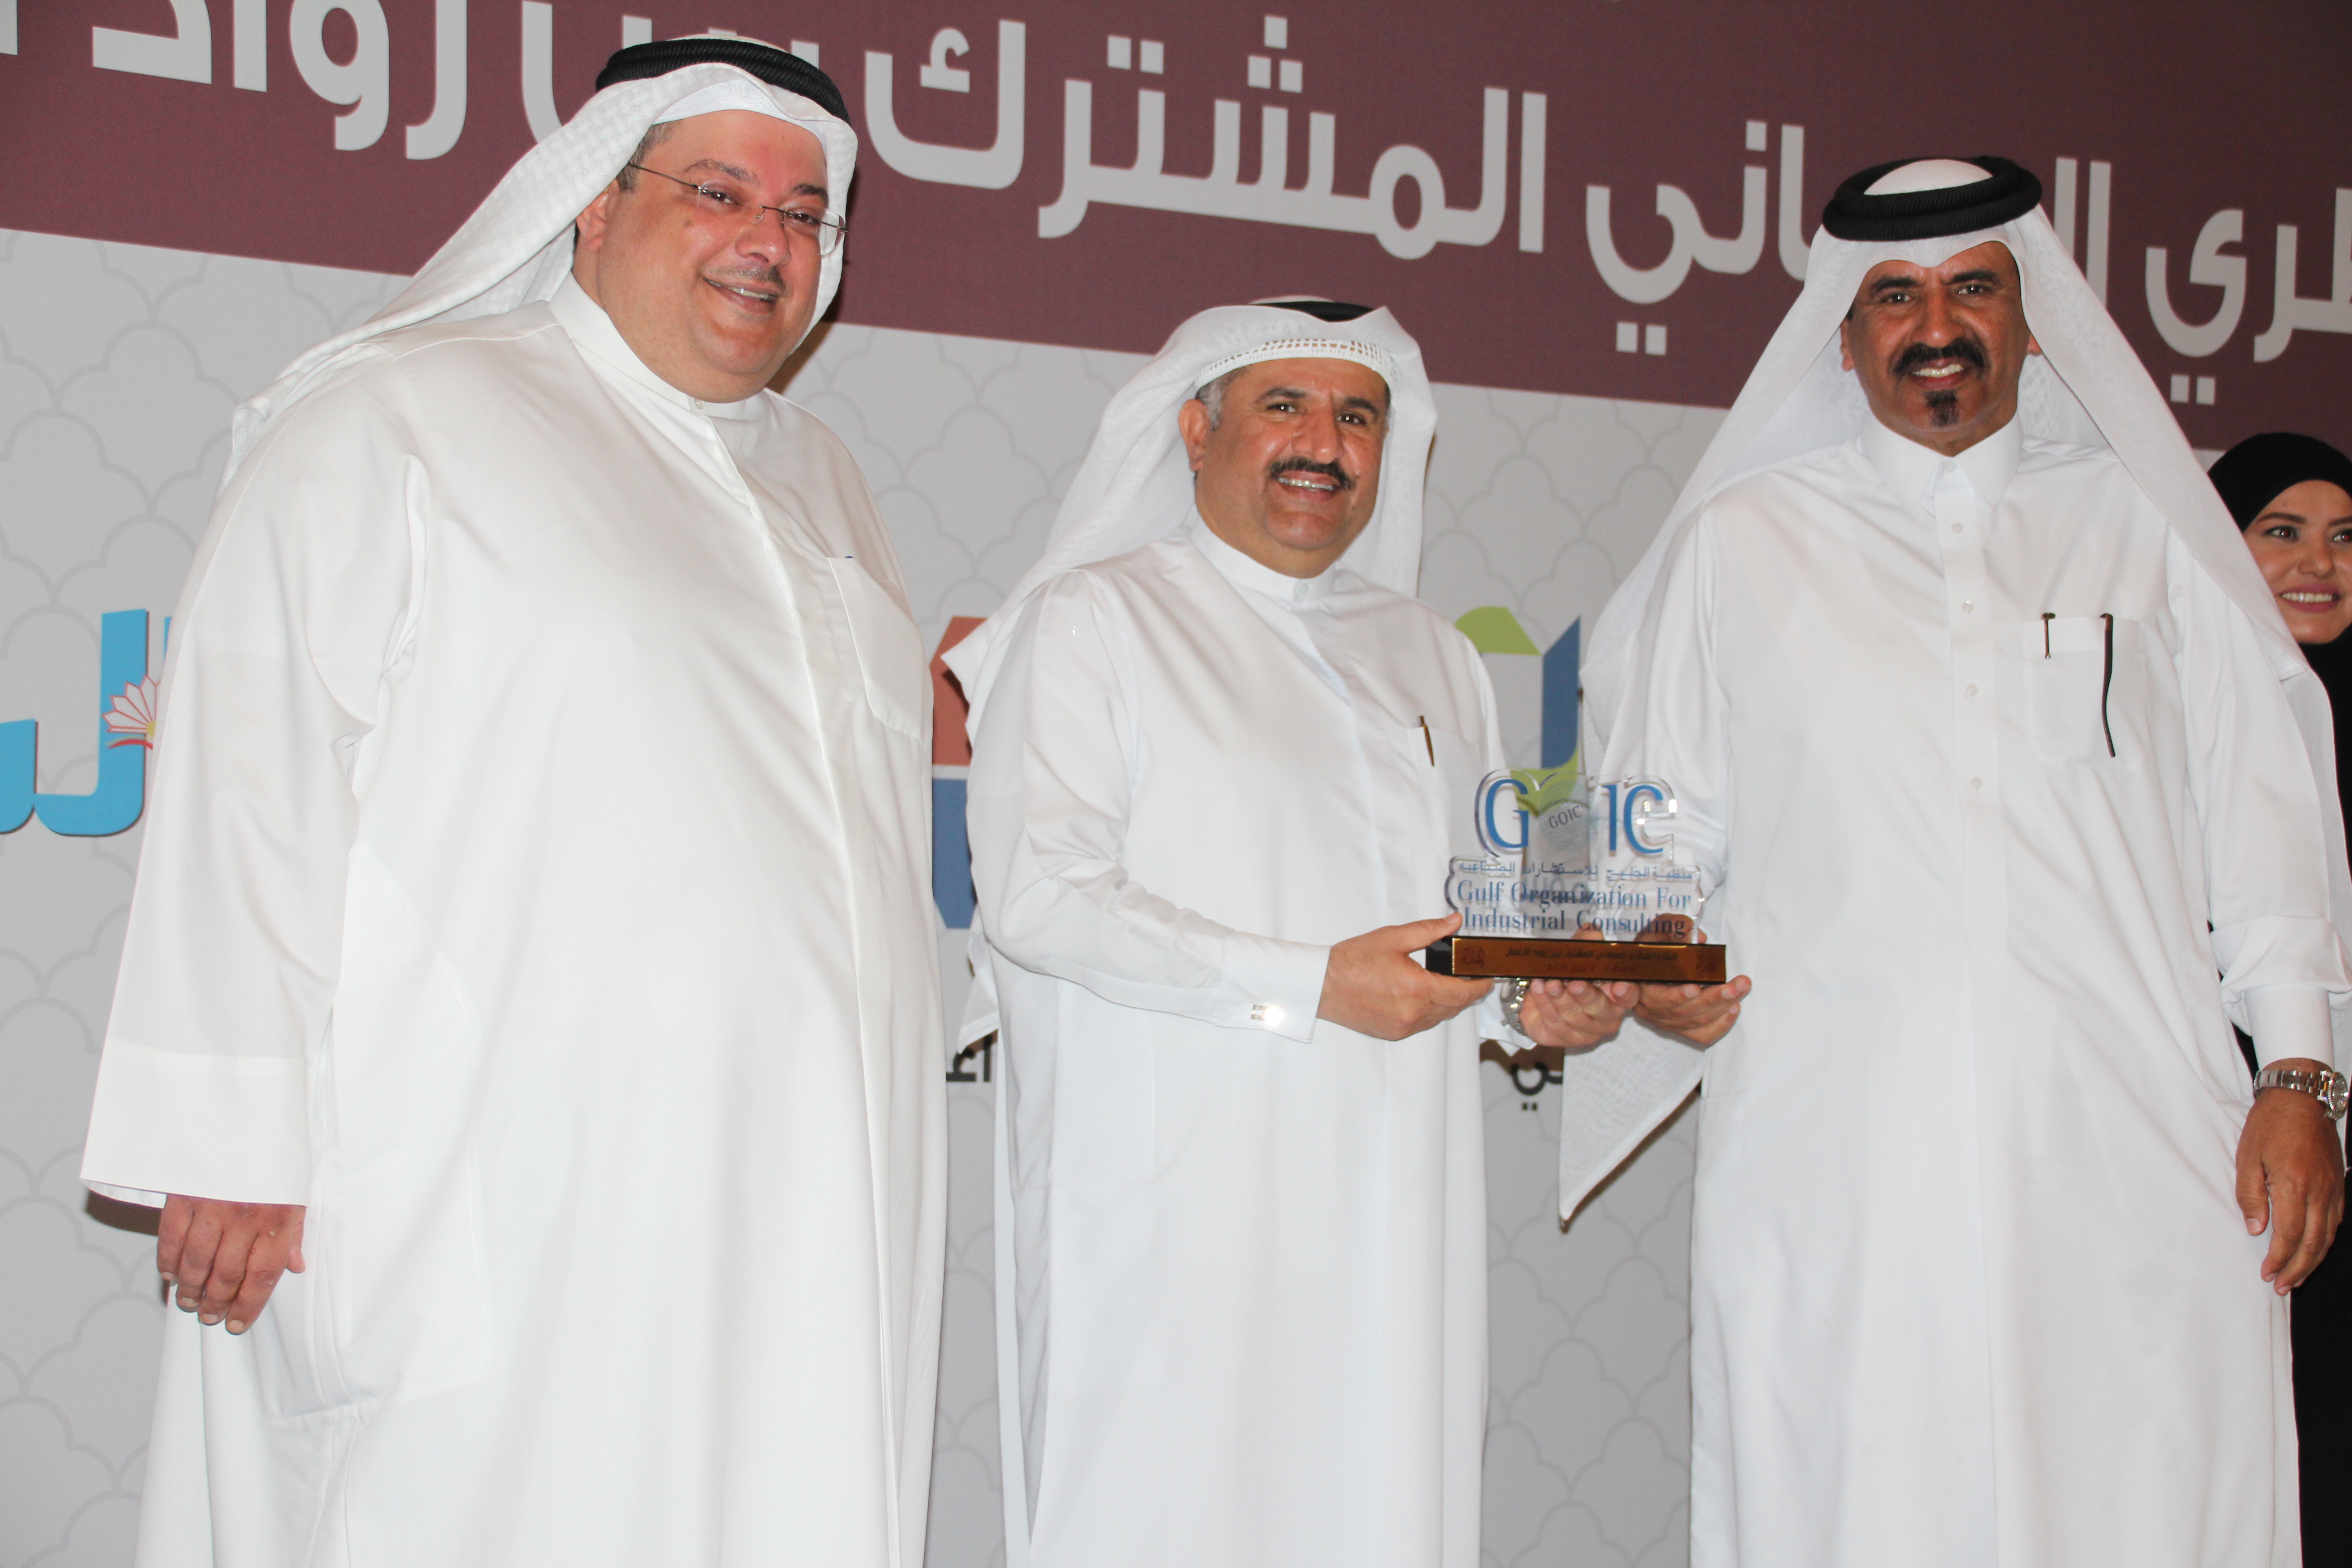 GOIC inaugurates the Qatari-Omani joint entrepreneurs meeting in Doha